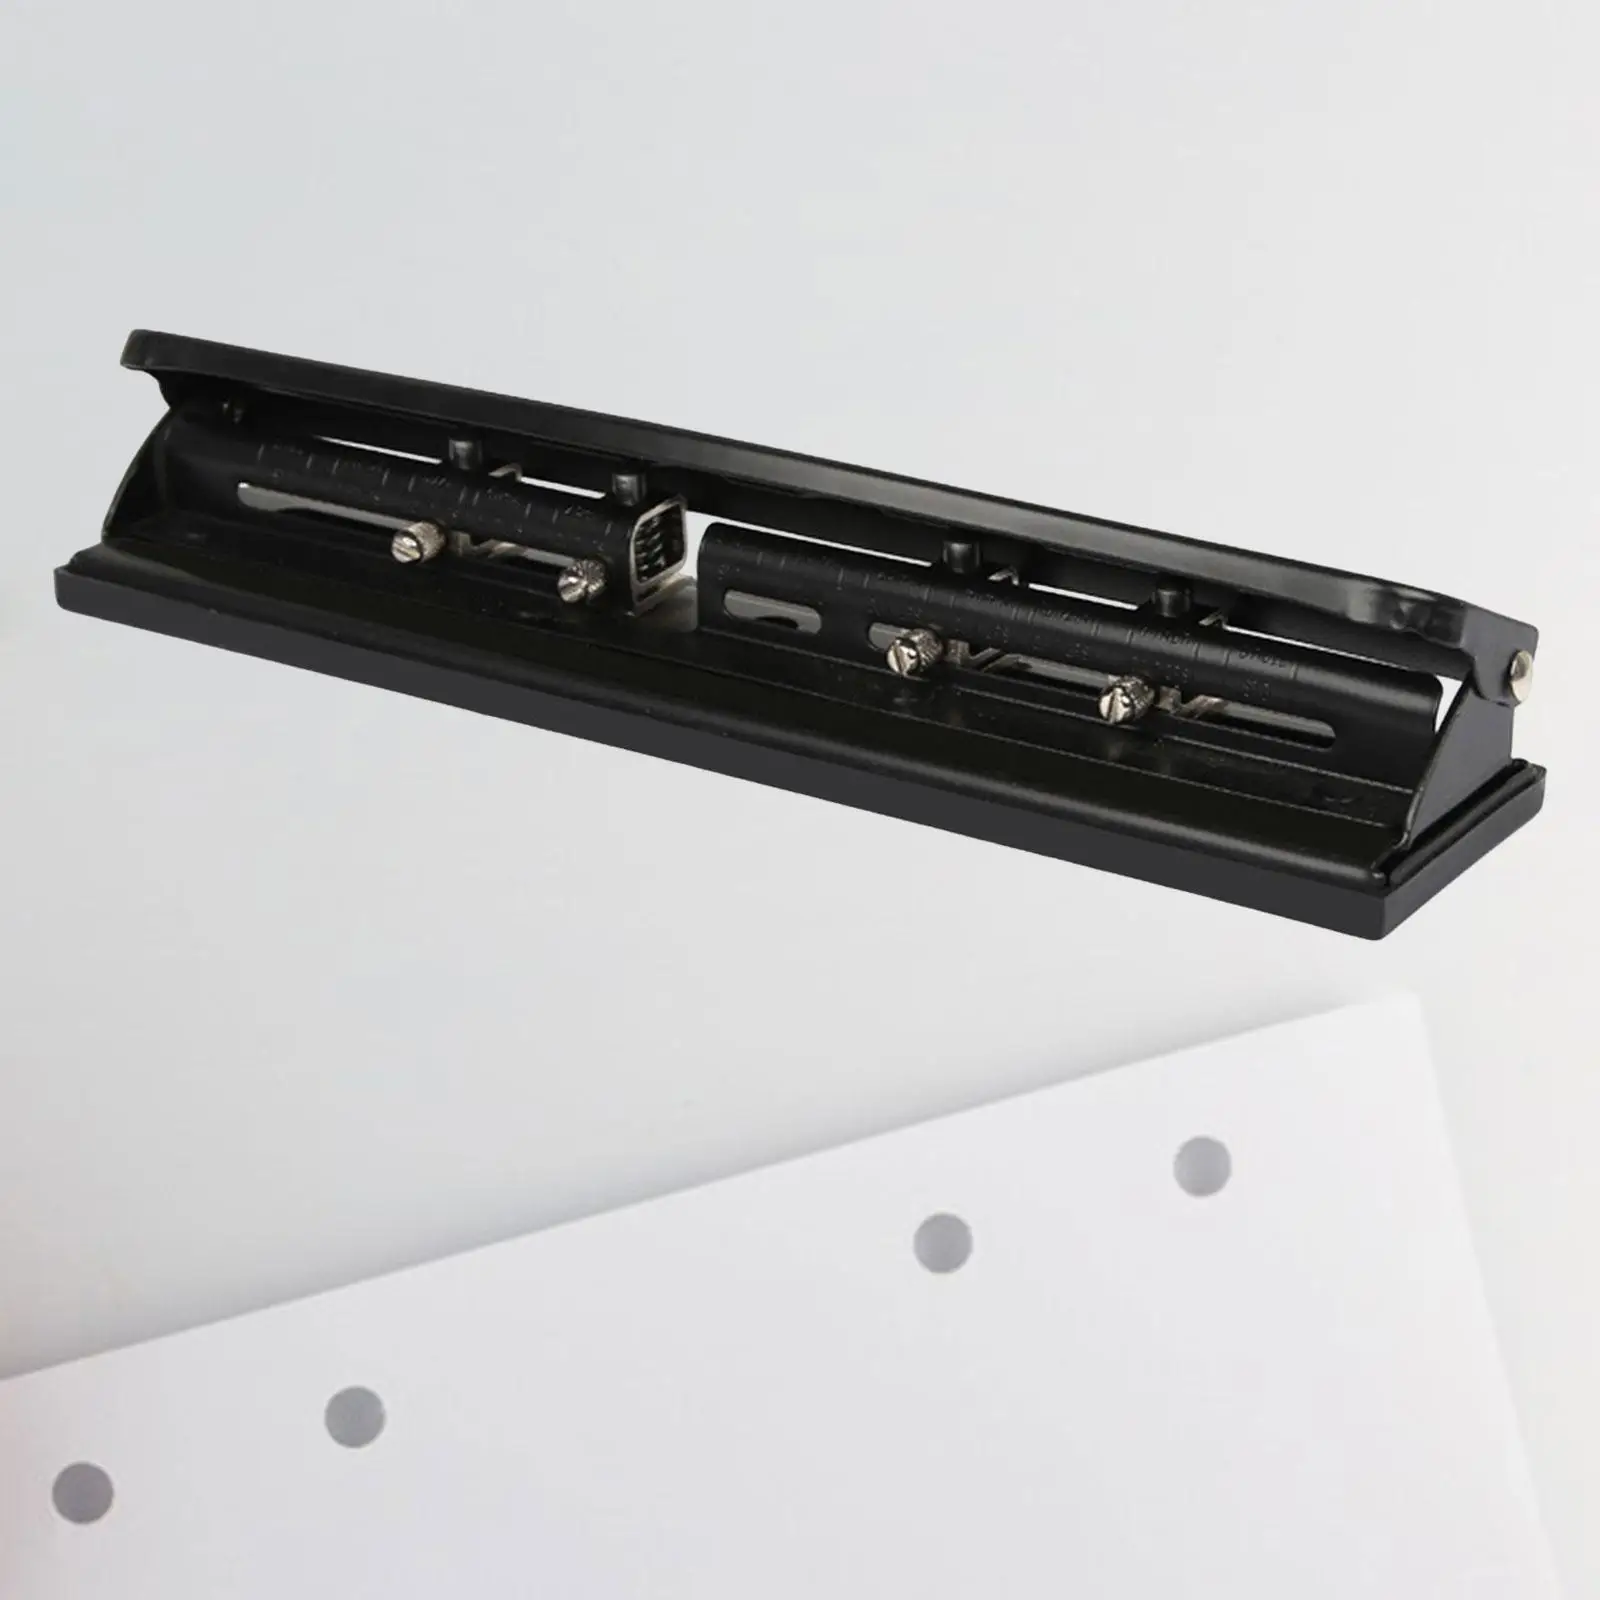 4 Hole Punch 10 Sheet Capacity File Binding Desktop Paper Puncher Paper Punching Machine for Working Craft Classroom